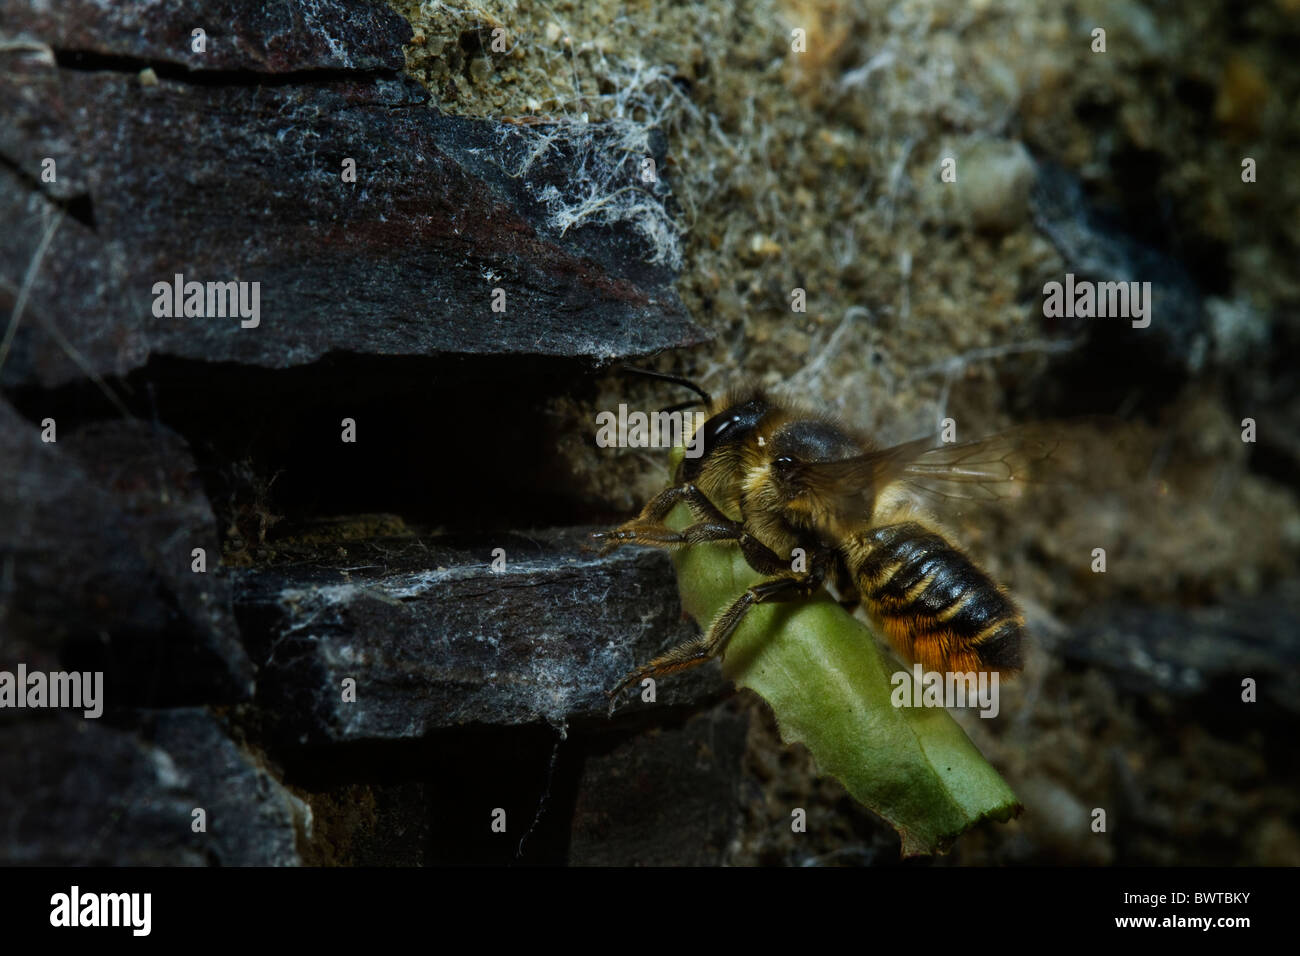 Patchwork foglia-cutter bee (Megachile centuncularis) in arrivo a terra con un uovo wraped fino in una foglia. Foto Stock